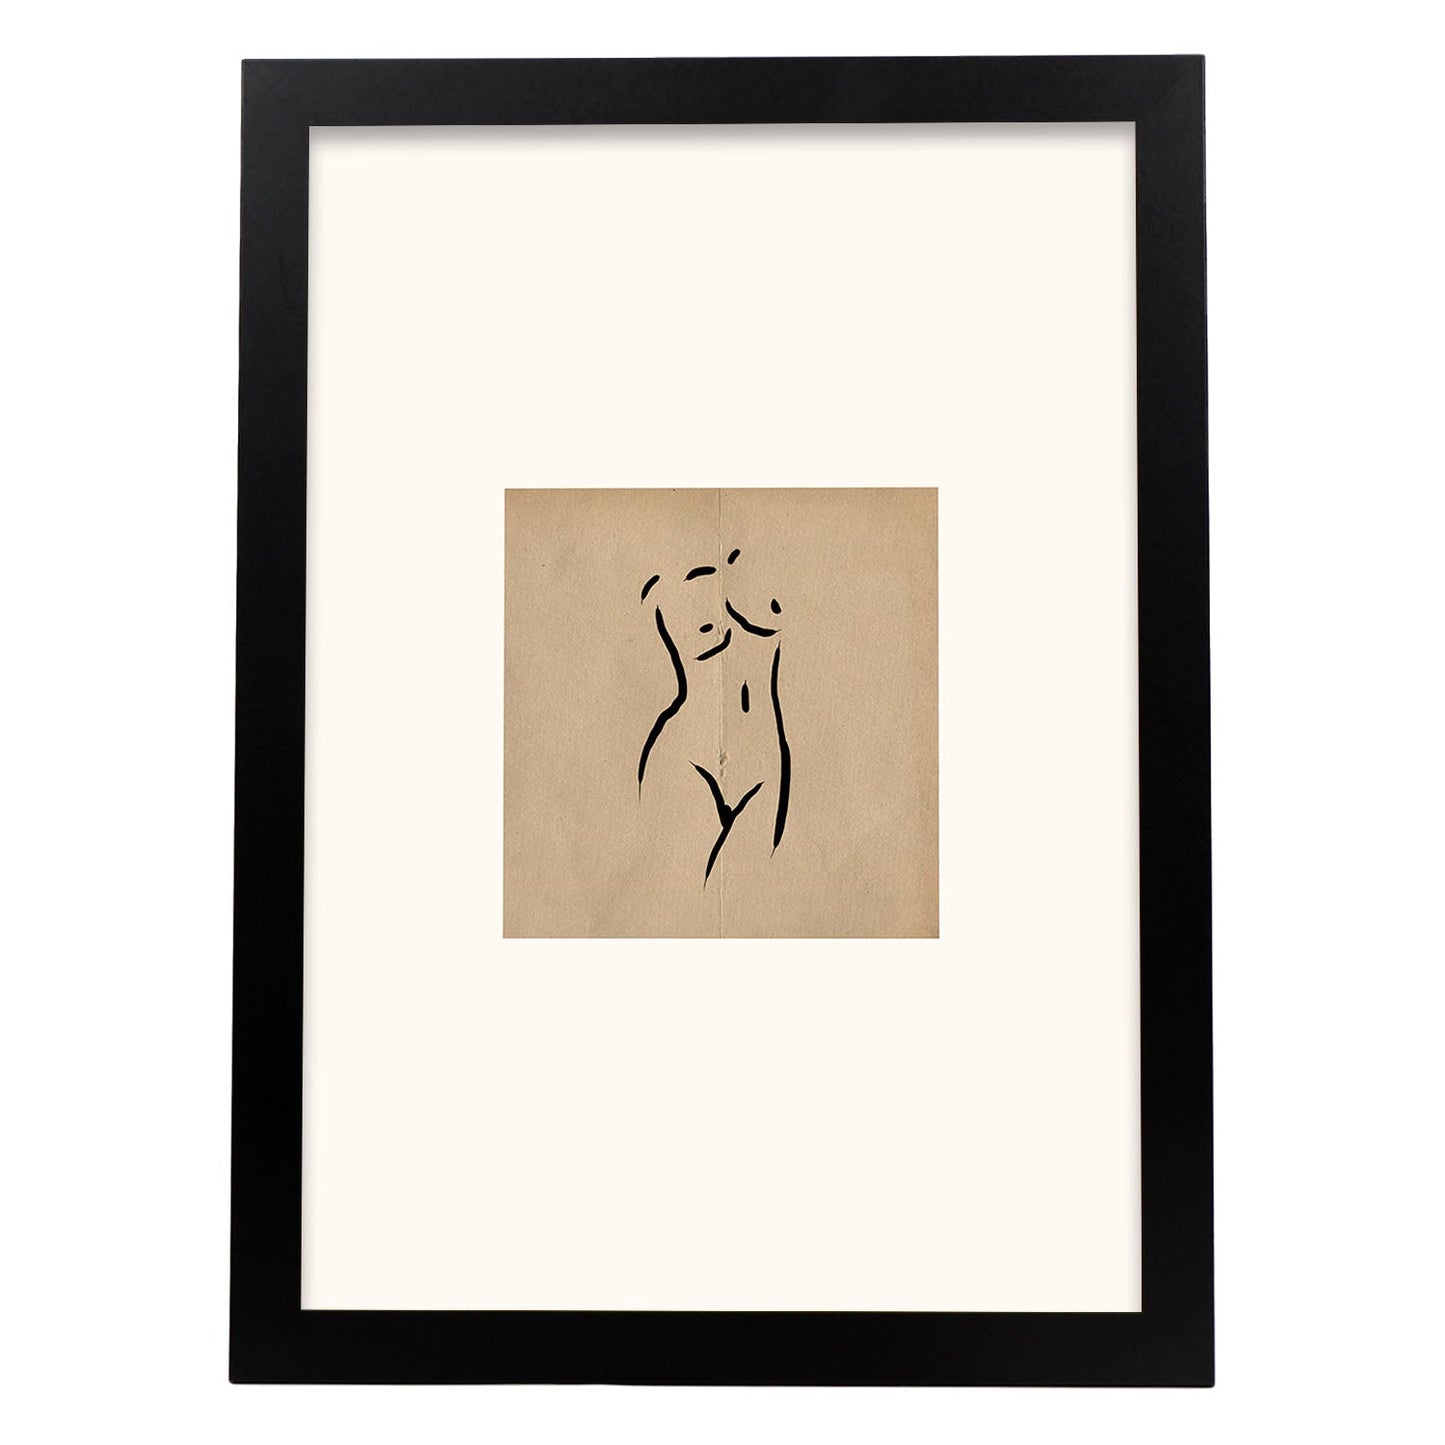 Lamina artistica decorativa con ilustración de Desnudos Matisse 03 estilo fauvista-Artwork-Nacnic-A4-Marco Negro-Nacnic Estudio SL